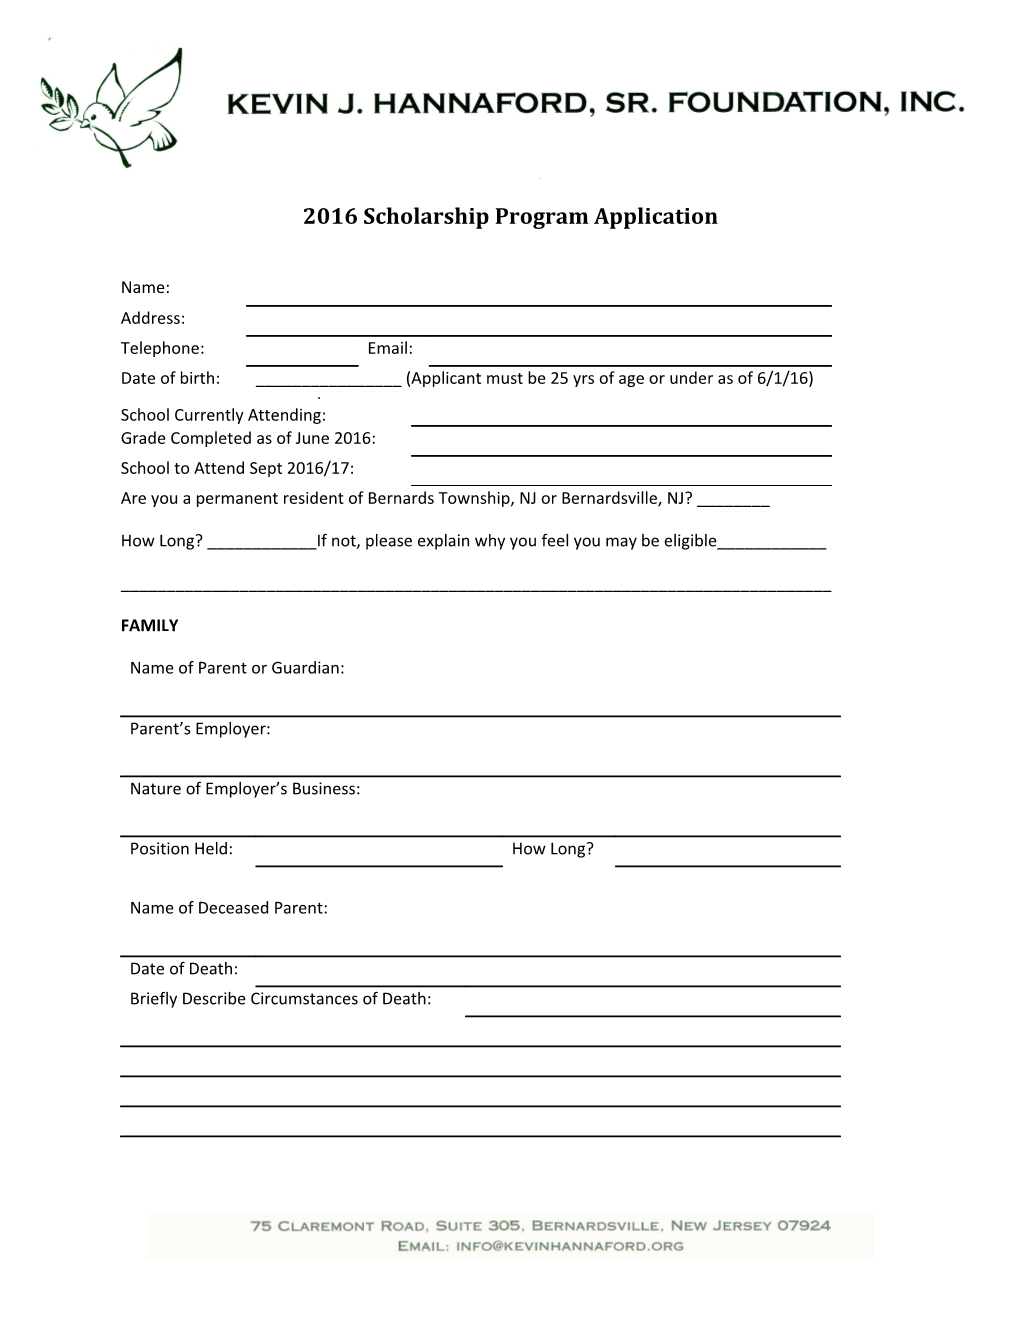 2009 Scholarship Program Application